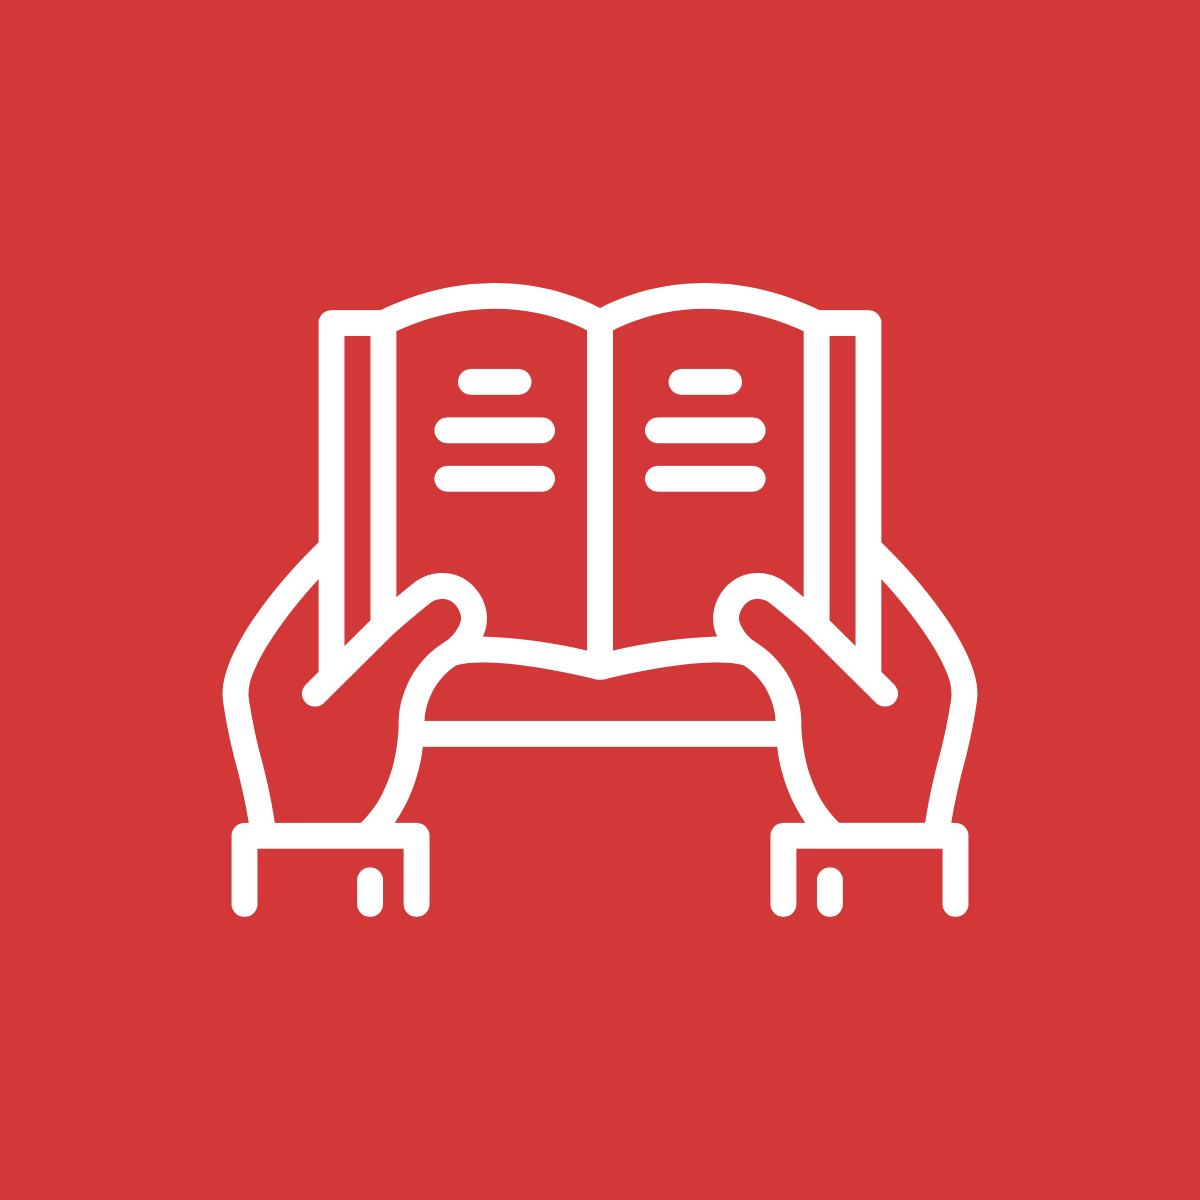 student handbook reading icon